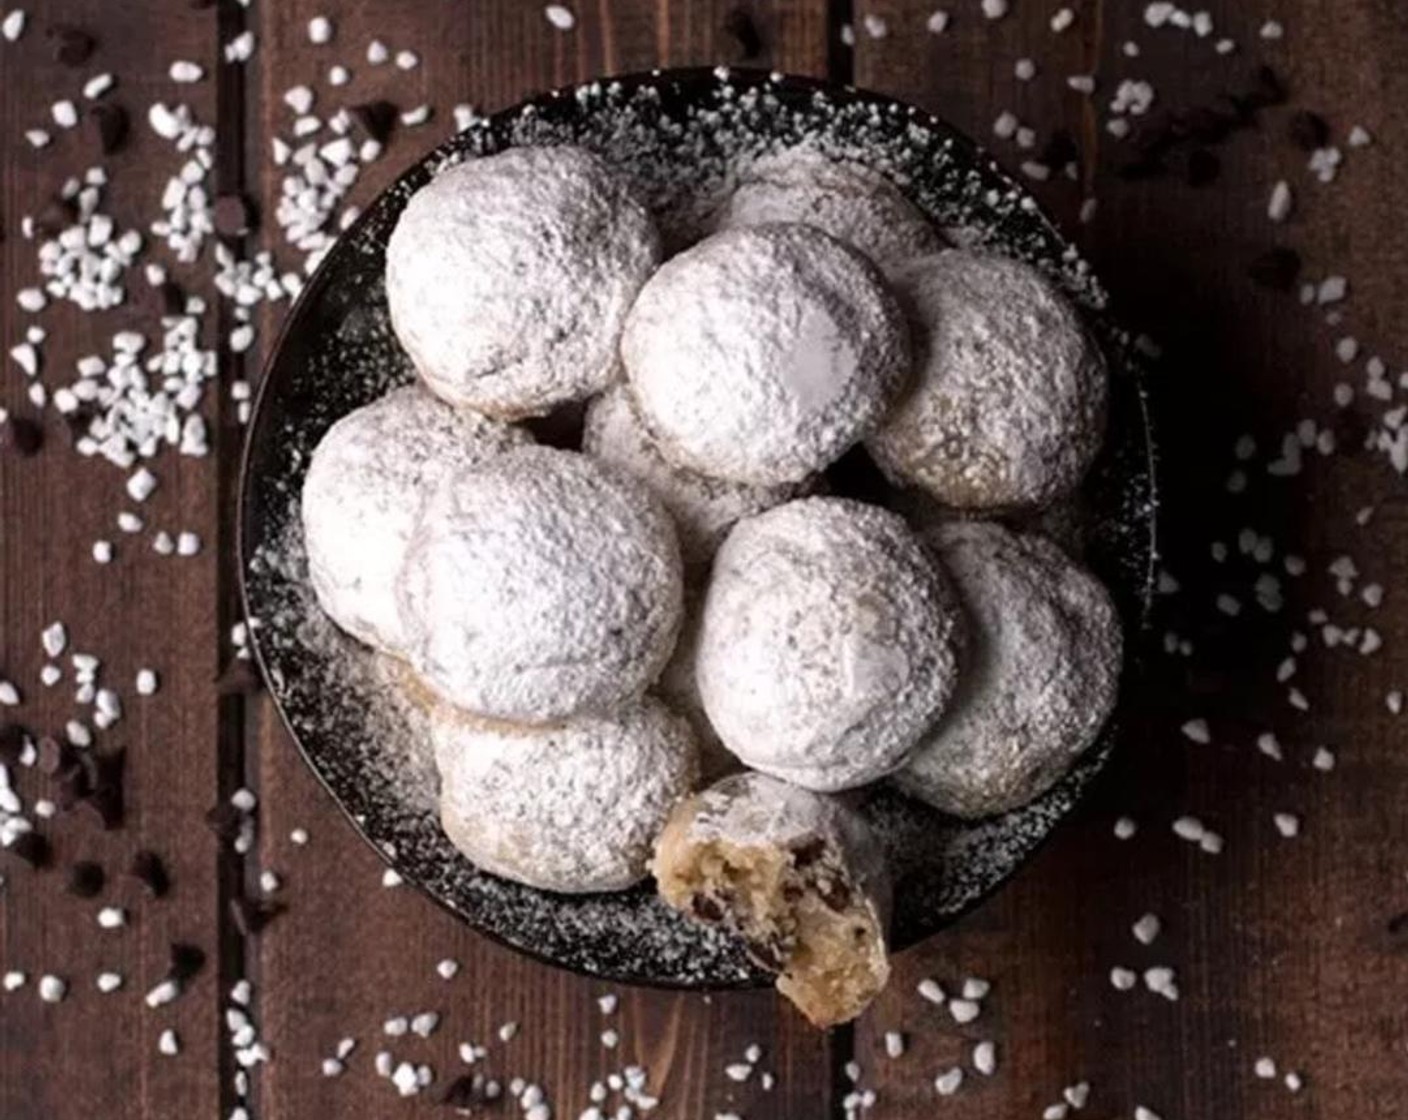 Swedish Pearl Snowball Cookies